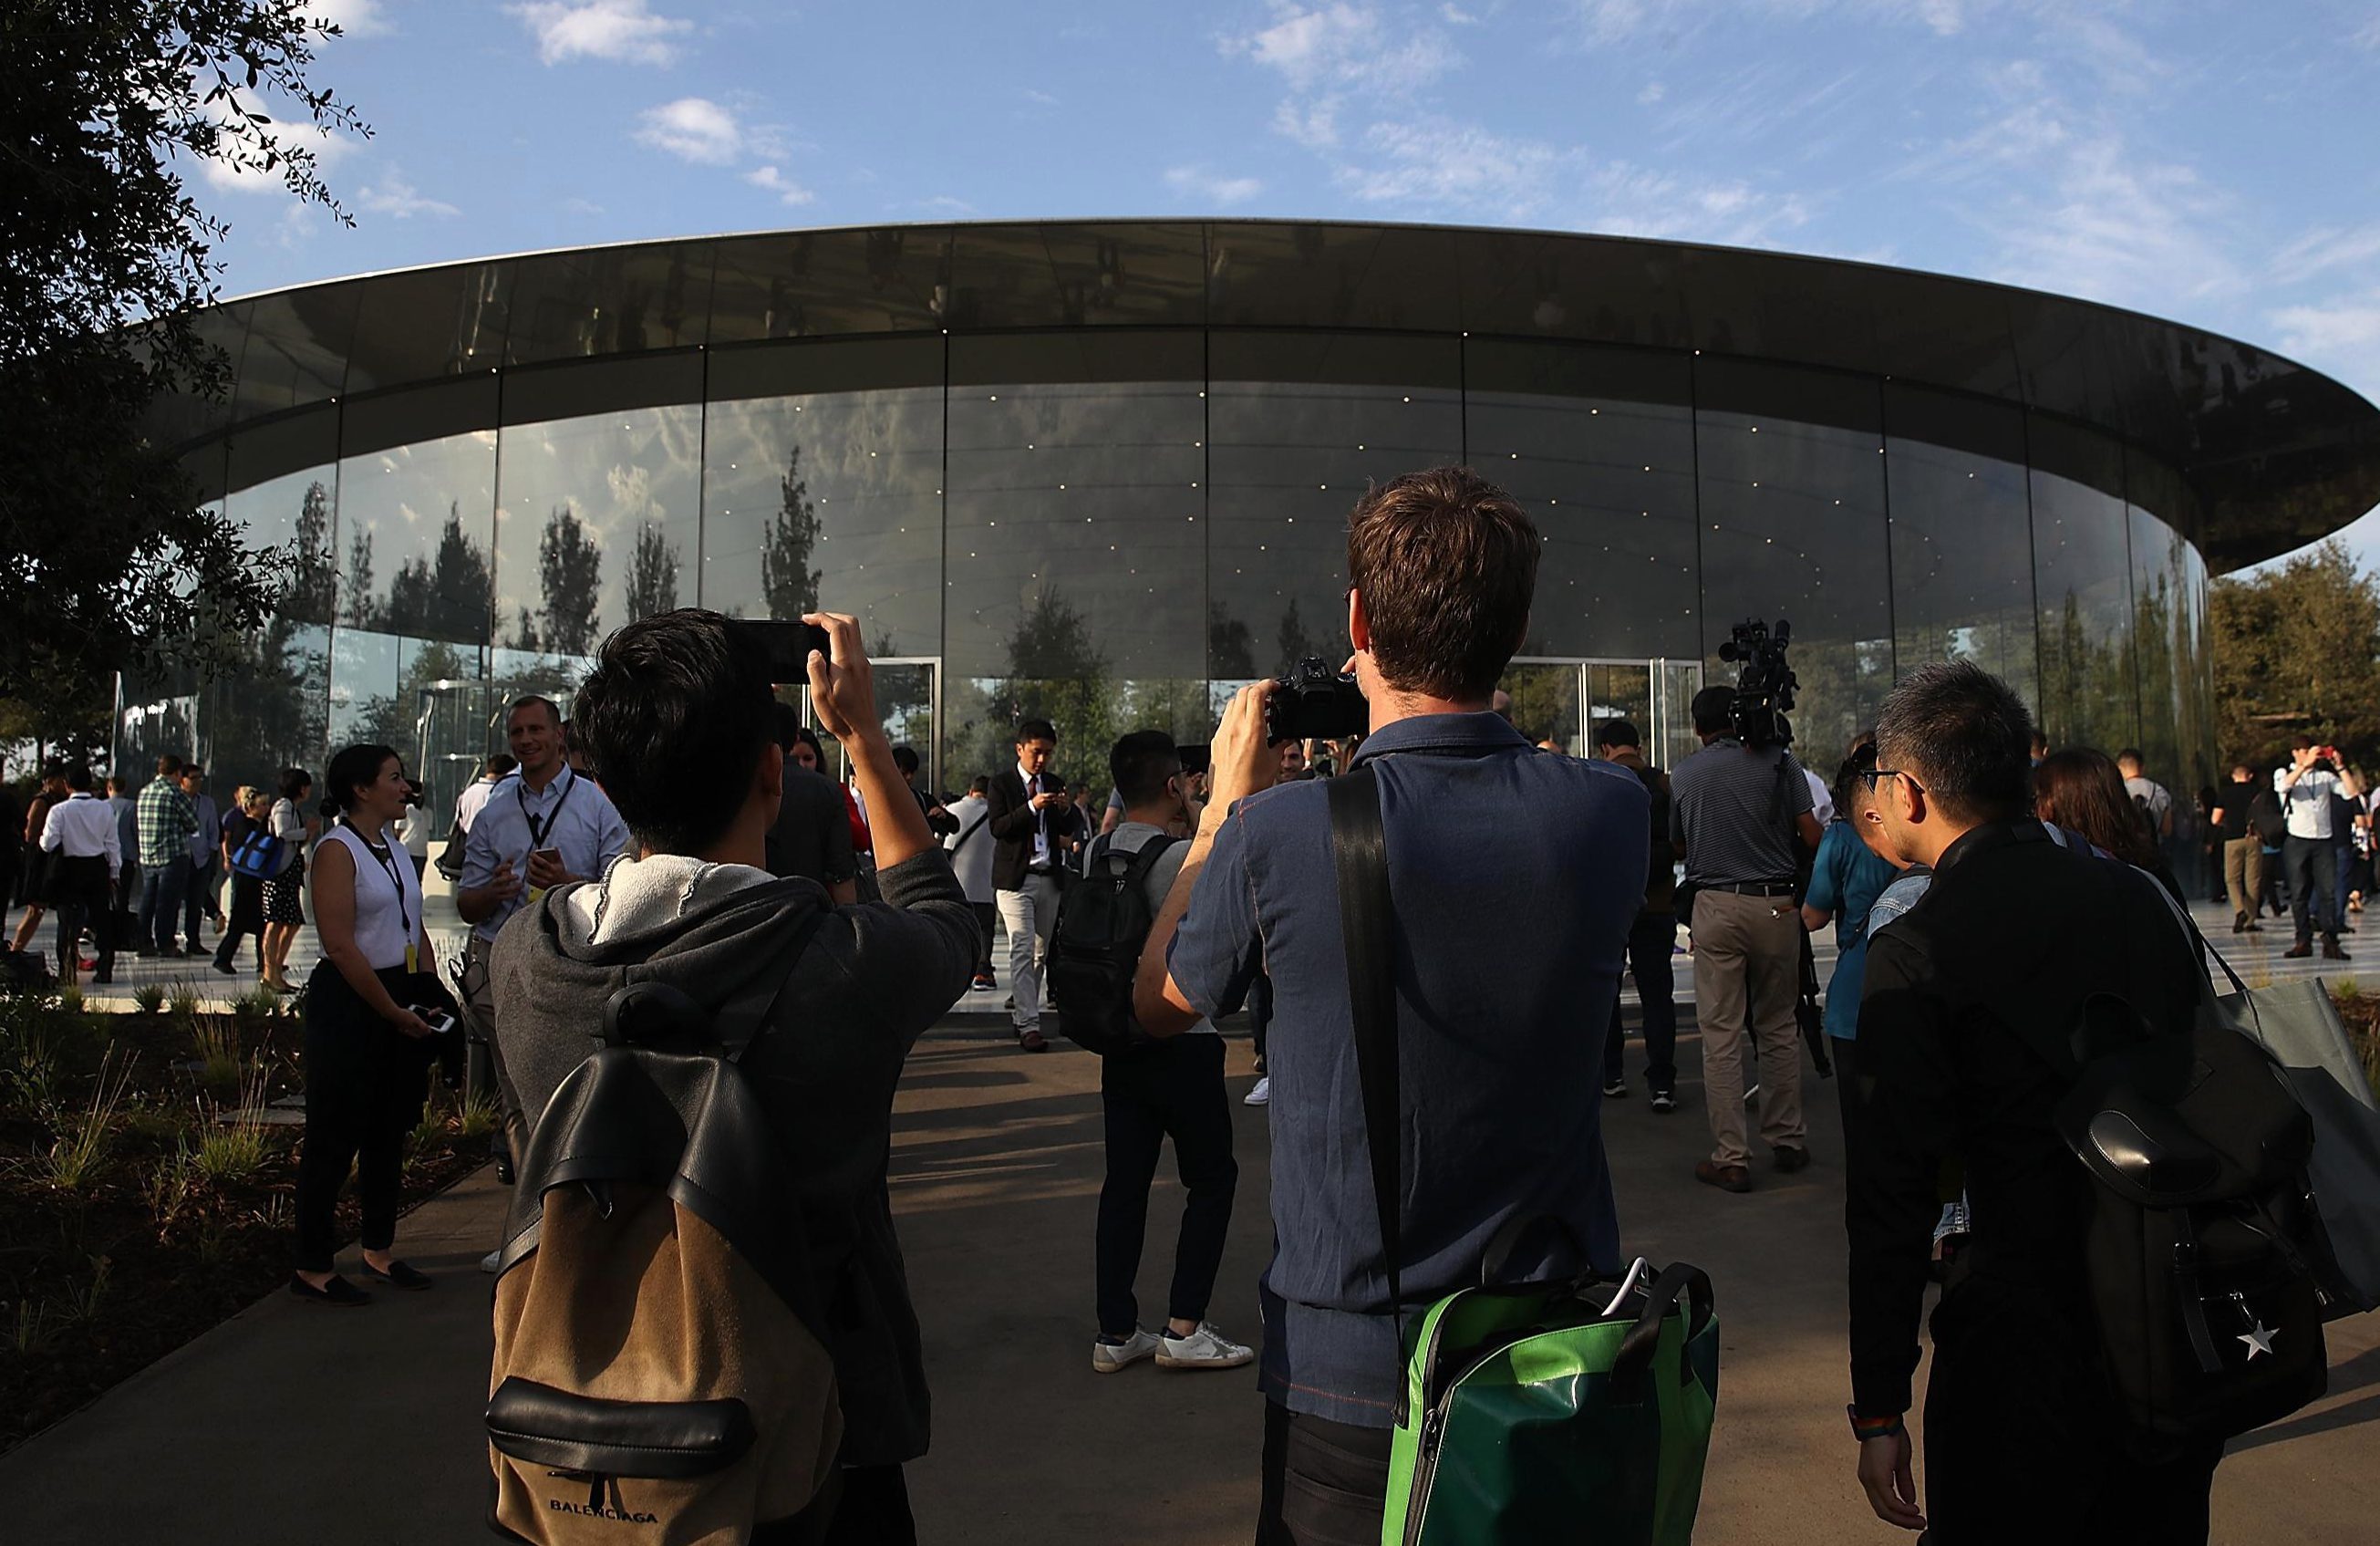  Kesempatan pertama melihat besar baru Apple Kampus Park menghasilkan banyak kegembiraan di samping peluncuran iPhone